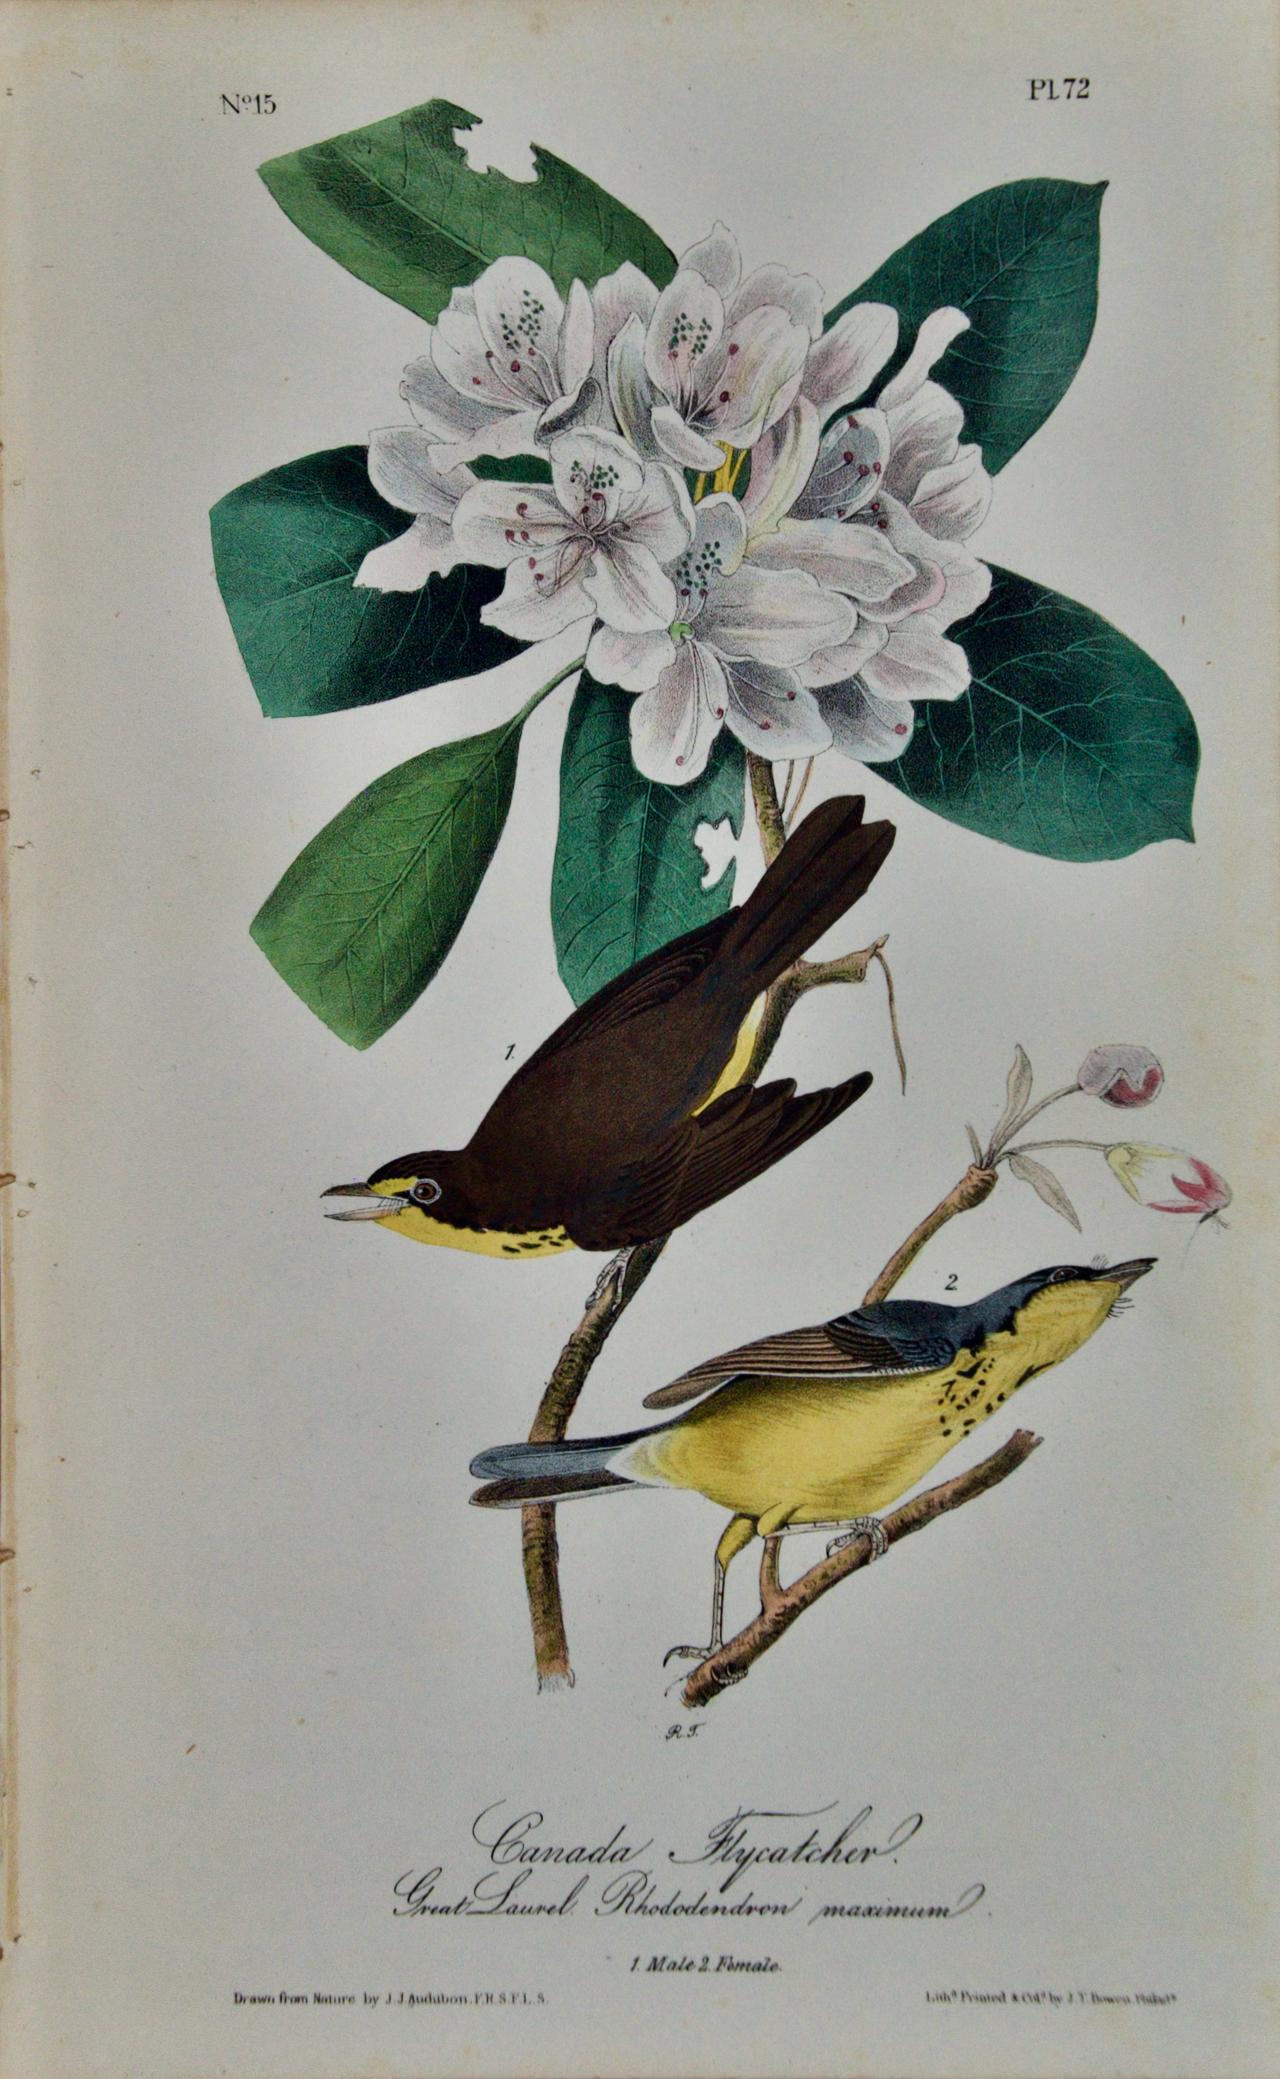 John James Audubon Animal Print - Canada Flycatcher: A First Octavo Edition Audubon Hand-colored Lithograph 